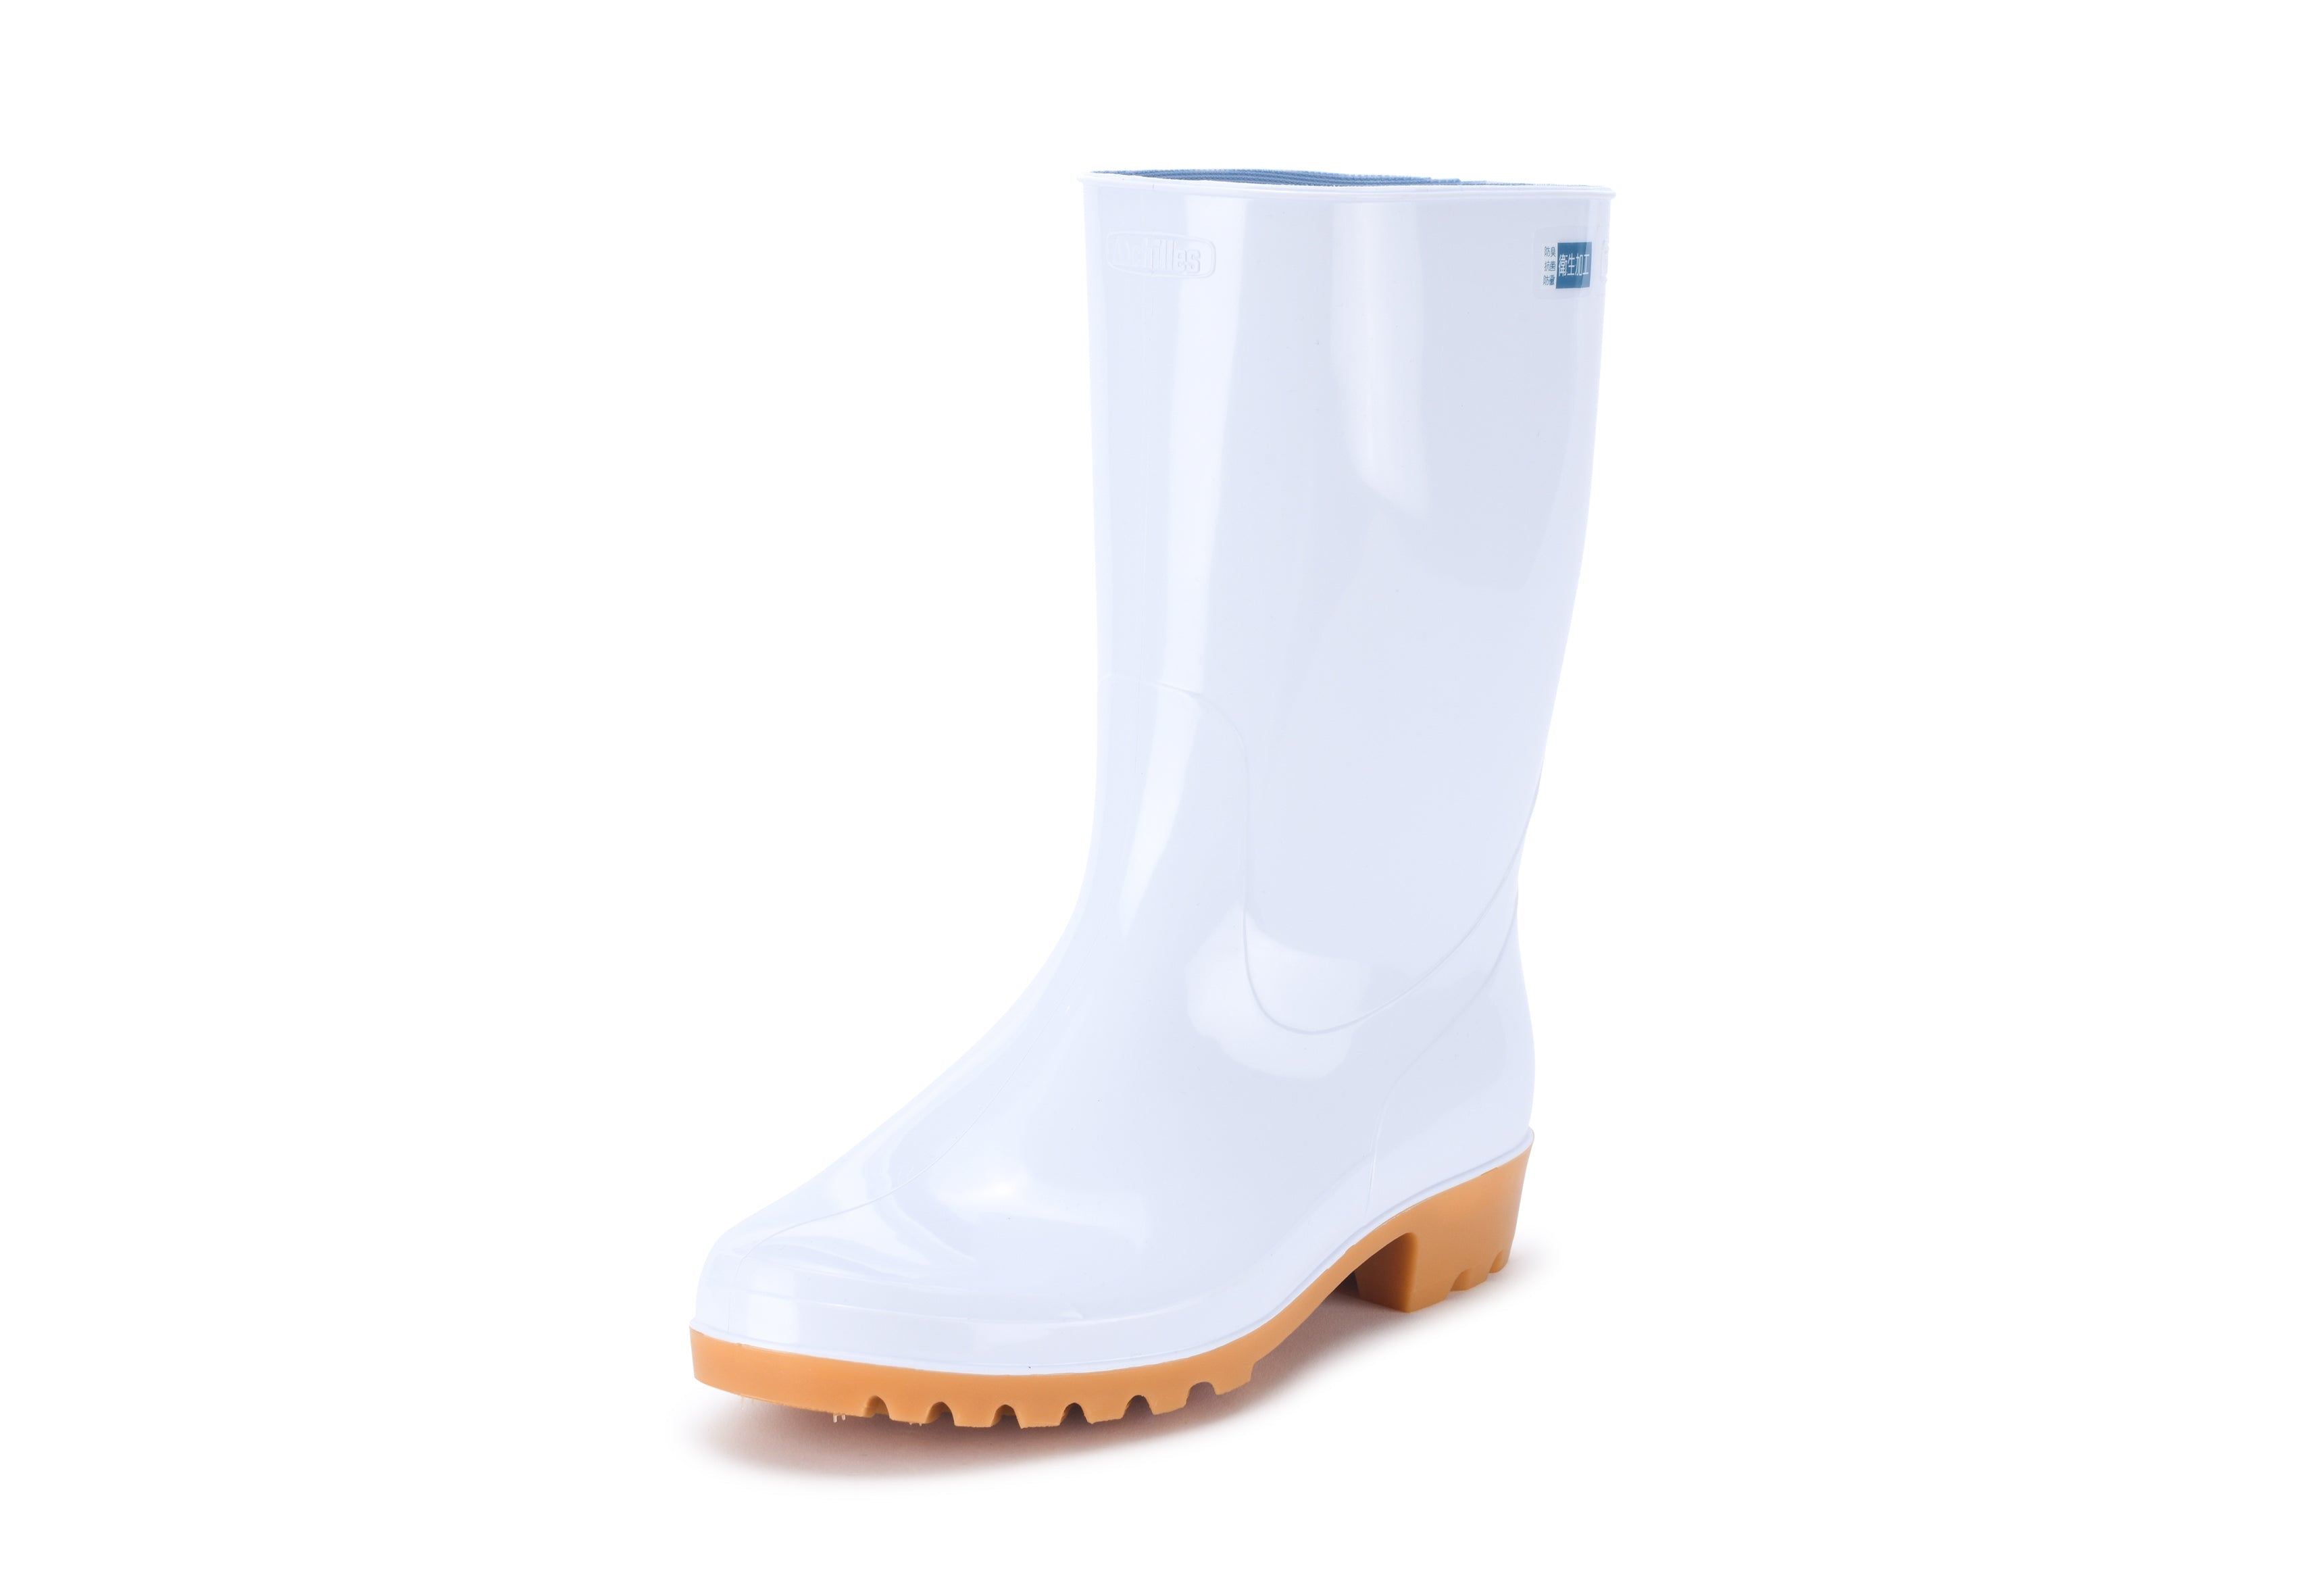 Labor Rain Boots 28cm (Japan Made)-Achilles-BK-JP/TW Size-1: 225-偉豐鞋 WELL SHOE HK-Well Shoe-偉豐鞋-偉豐網-荃灣鞋店-Functional shoes-Hong Kong Tsuen Wan Shoe Store-Tai Wan Shoe-Japan Shoe-高品質功能鞋-台灣進口鞋-日本進口鞋-High-quality shoes-鞋類配件-荃灣進口鞋-香港鞋店-優質鞋類產品-水靴-帆布鞋-廚師鞋-香港鞋品牌-Hong Kong Shoes brand-長者鞋-Hong Kong Rain Boots-Kitchen shoes-Cruthes-Slipper-Well Shoe Hong Kong-Anello-Arriba-休閒鞋-舒適鞋-健康鞋-皮鞋-Healthy shoes-Leather shoes-Hiking shoes